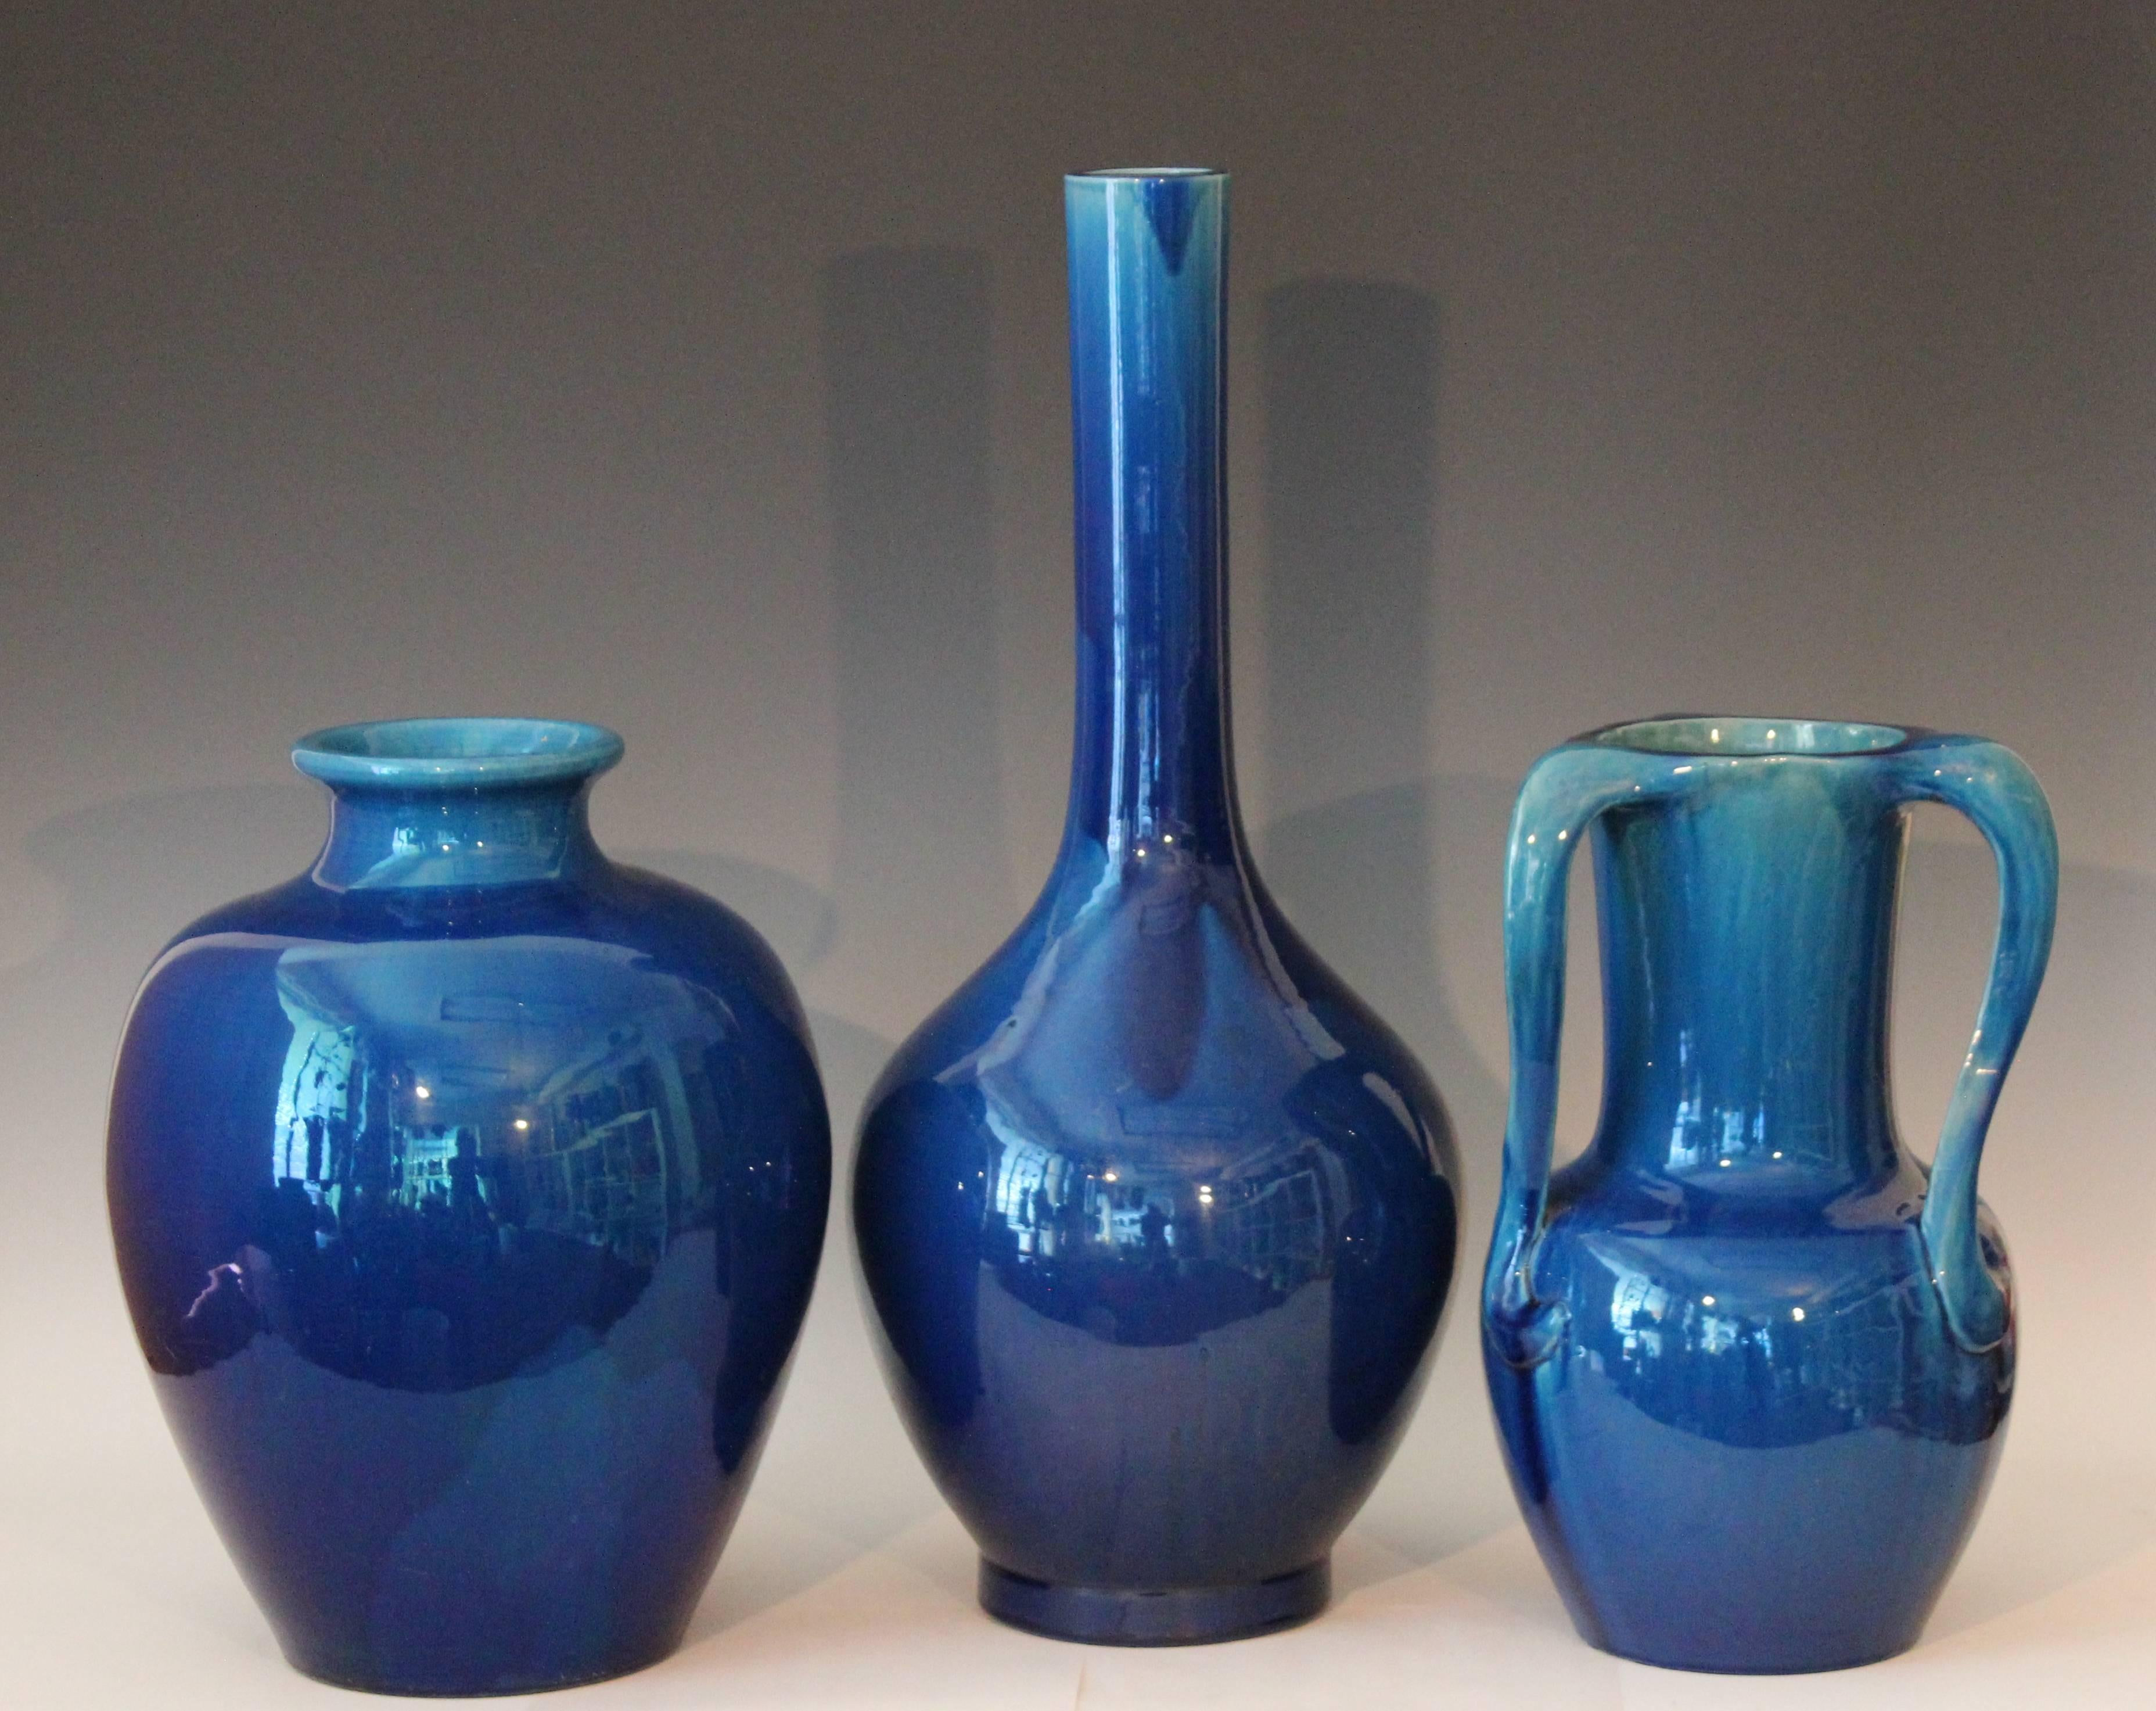 20th Century Large Antique Kyoto Pottery Point Bottle Vase in Blue Crackle Glaze